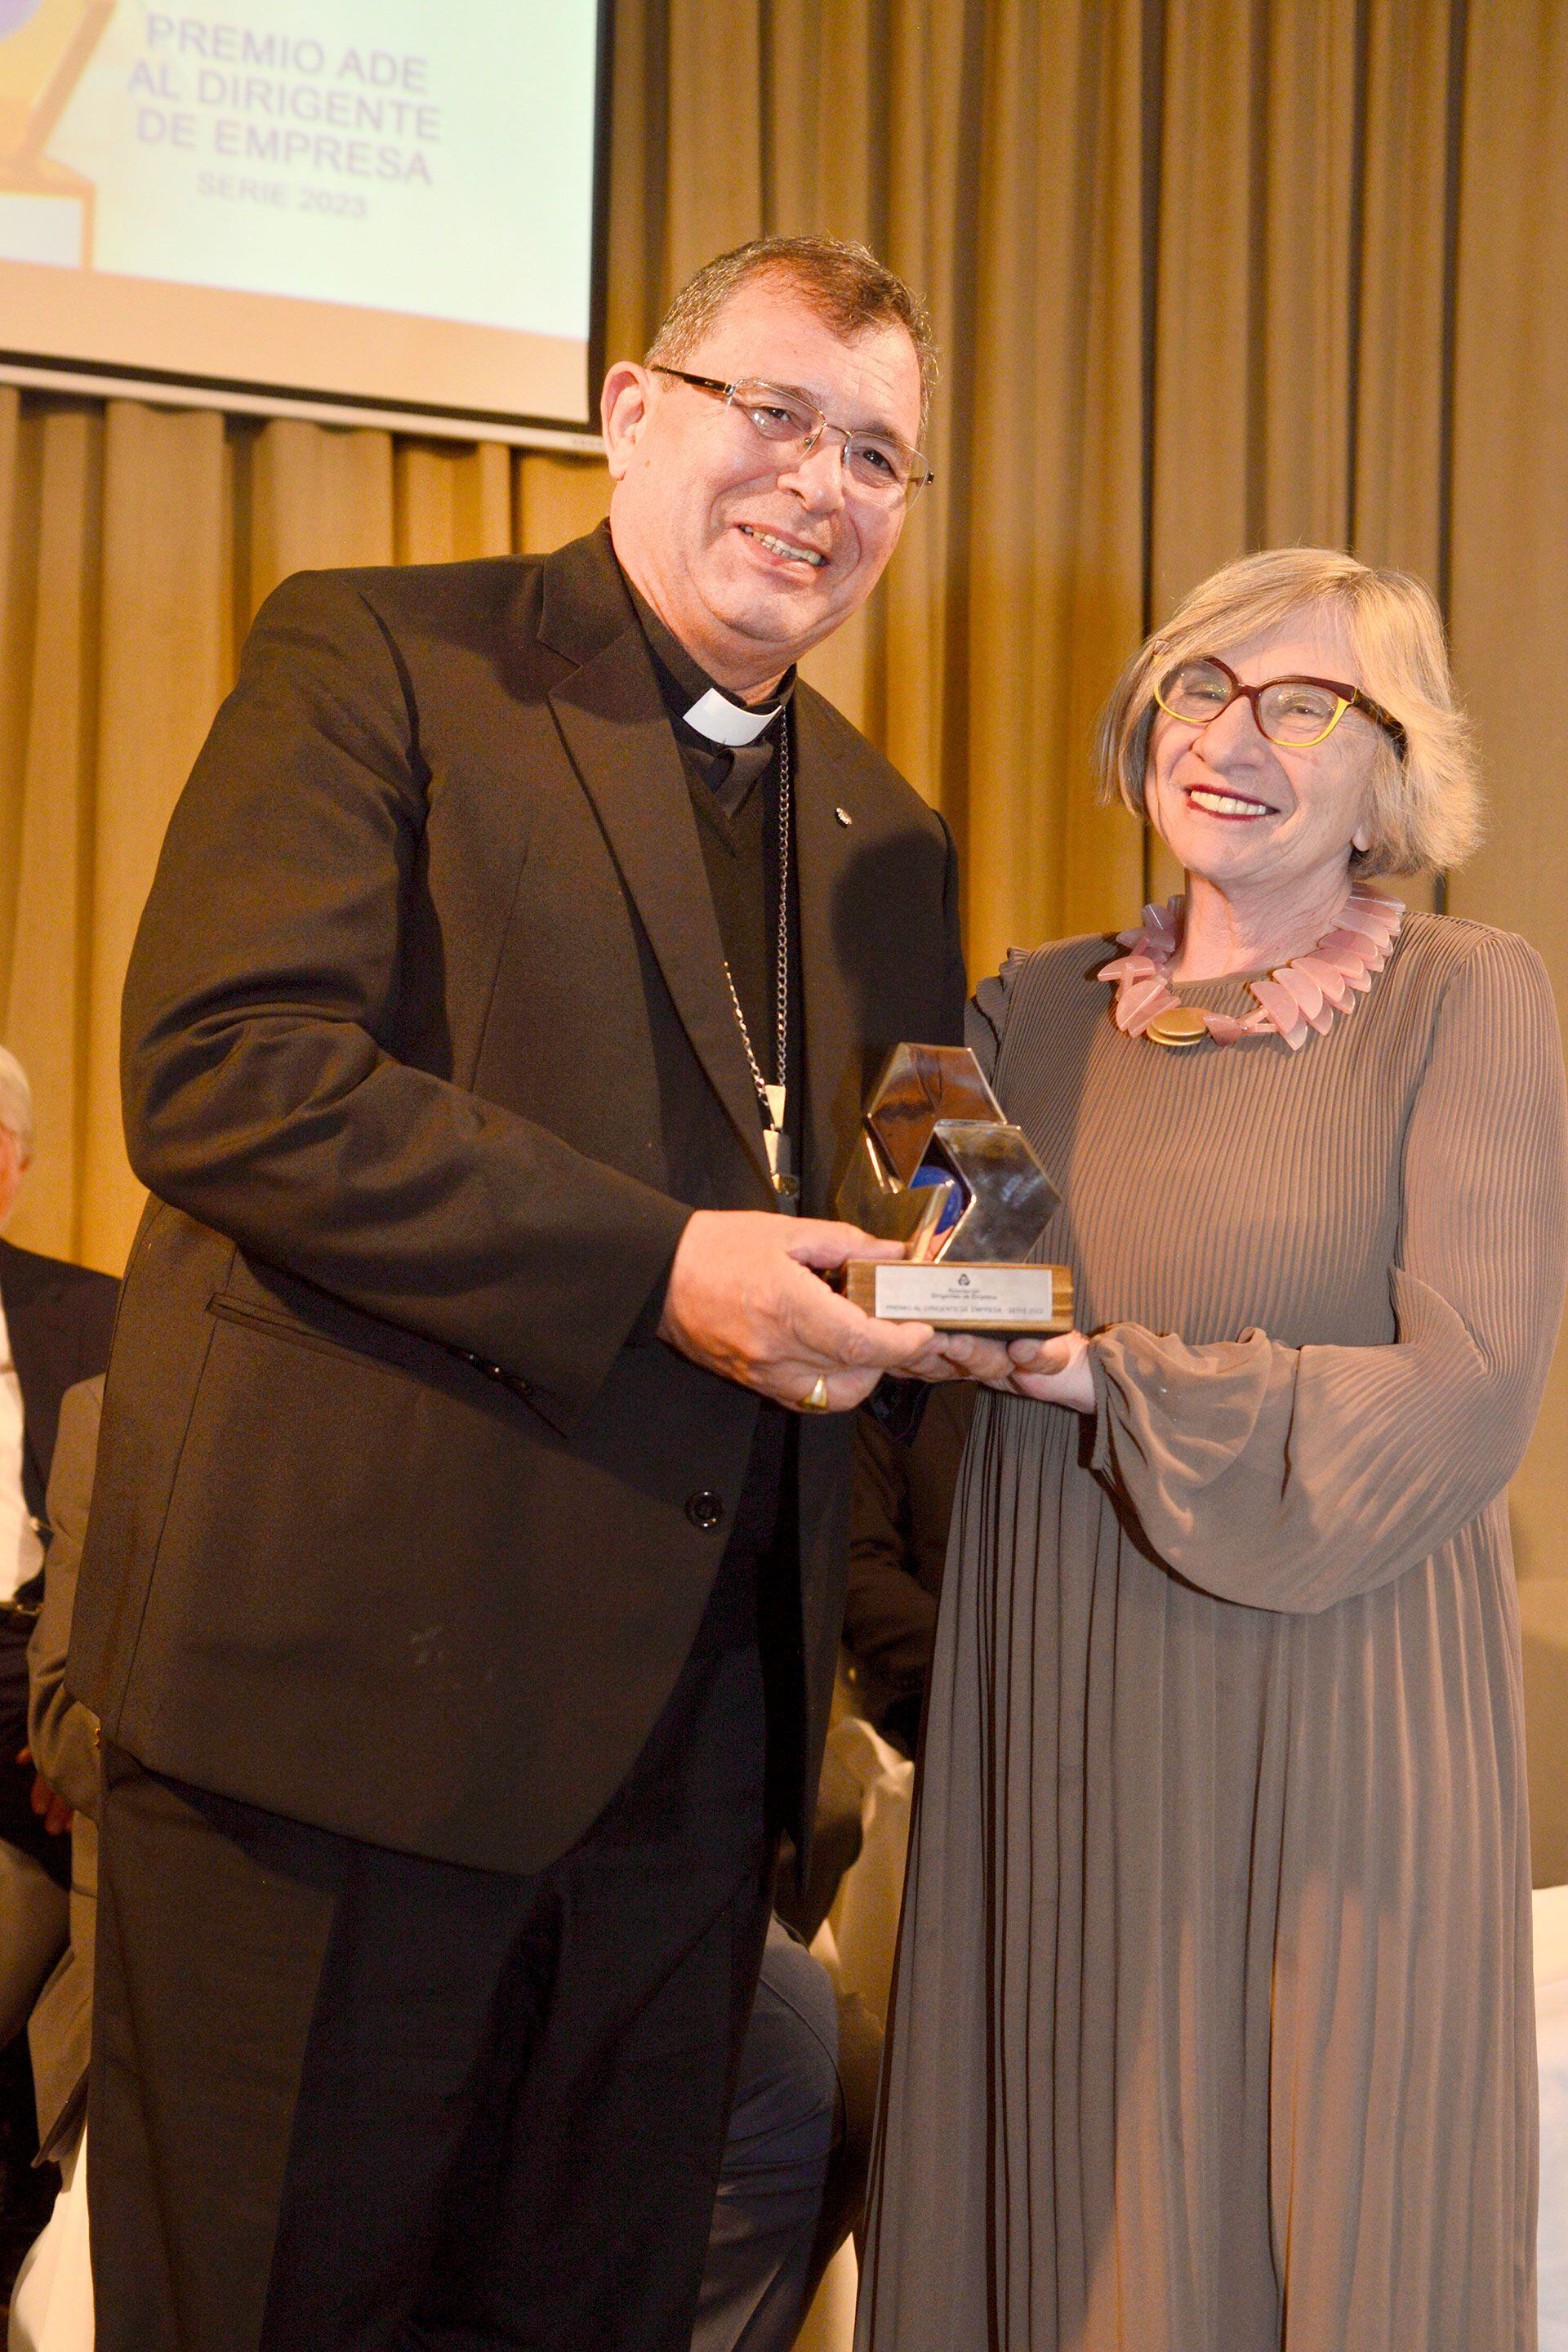 Graciela Adán le entregó su premio ADE a Monseñor Carlos Tissera (Cáritas Argentina)
